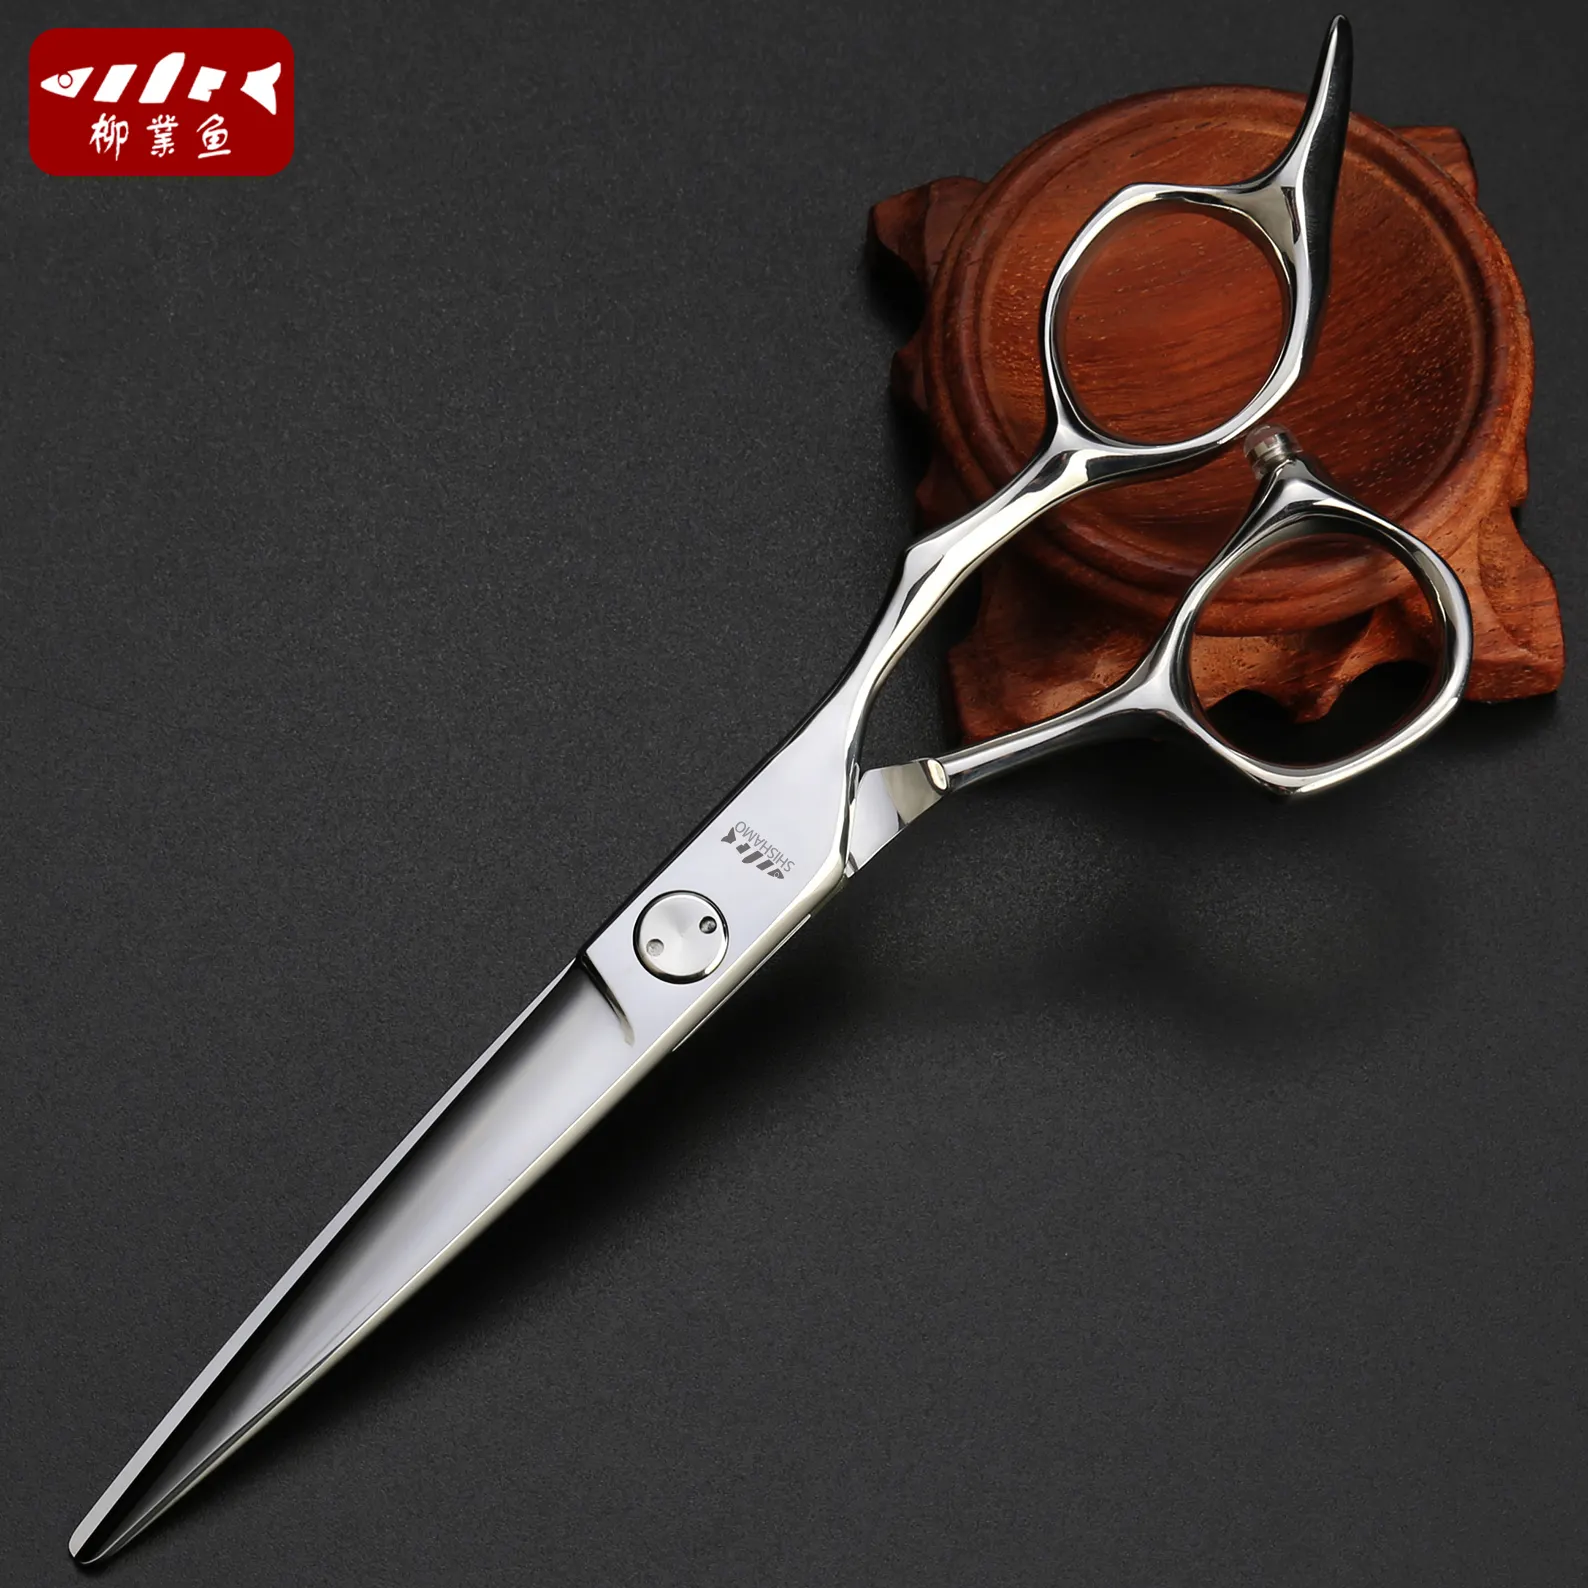 Hairdressing scissors CNC technological High quality Barber scissors hair cutting scissors with Premium Japan VG10 Steel for Salon